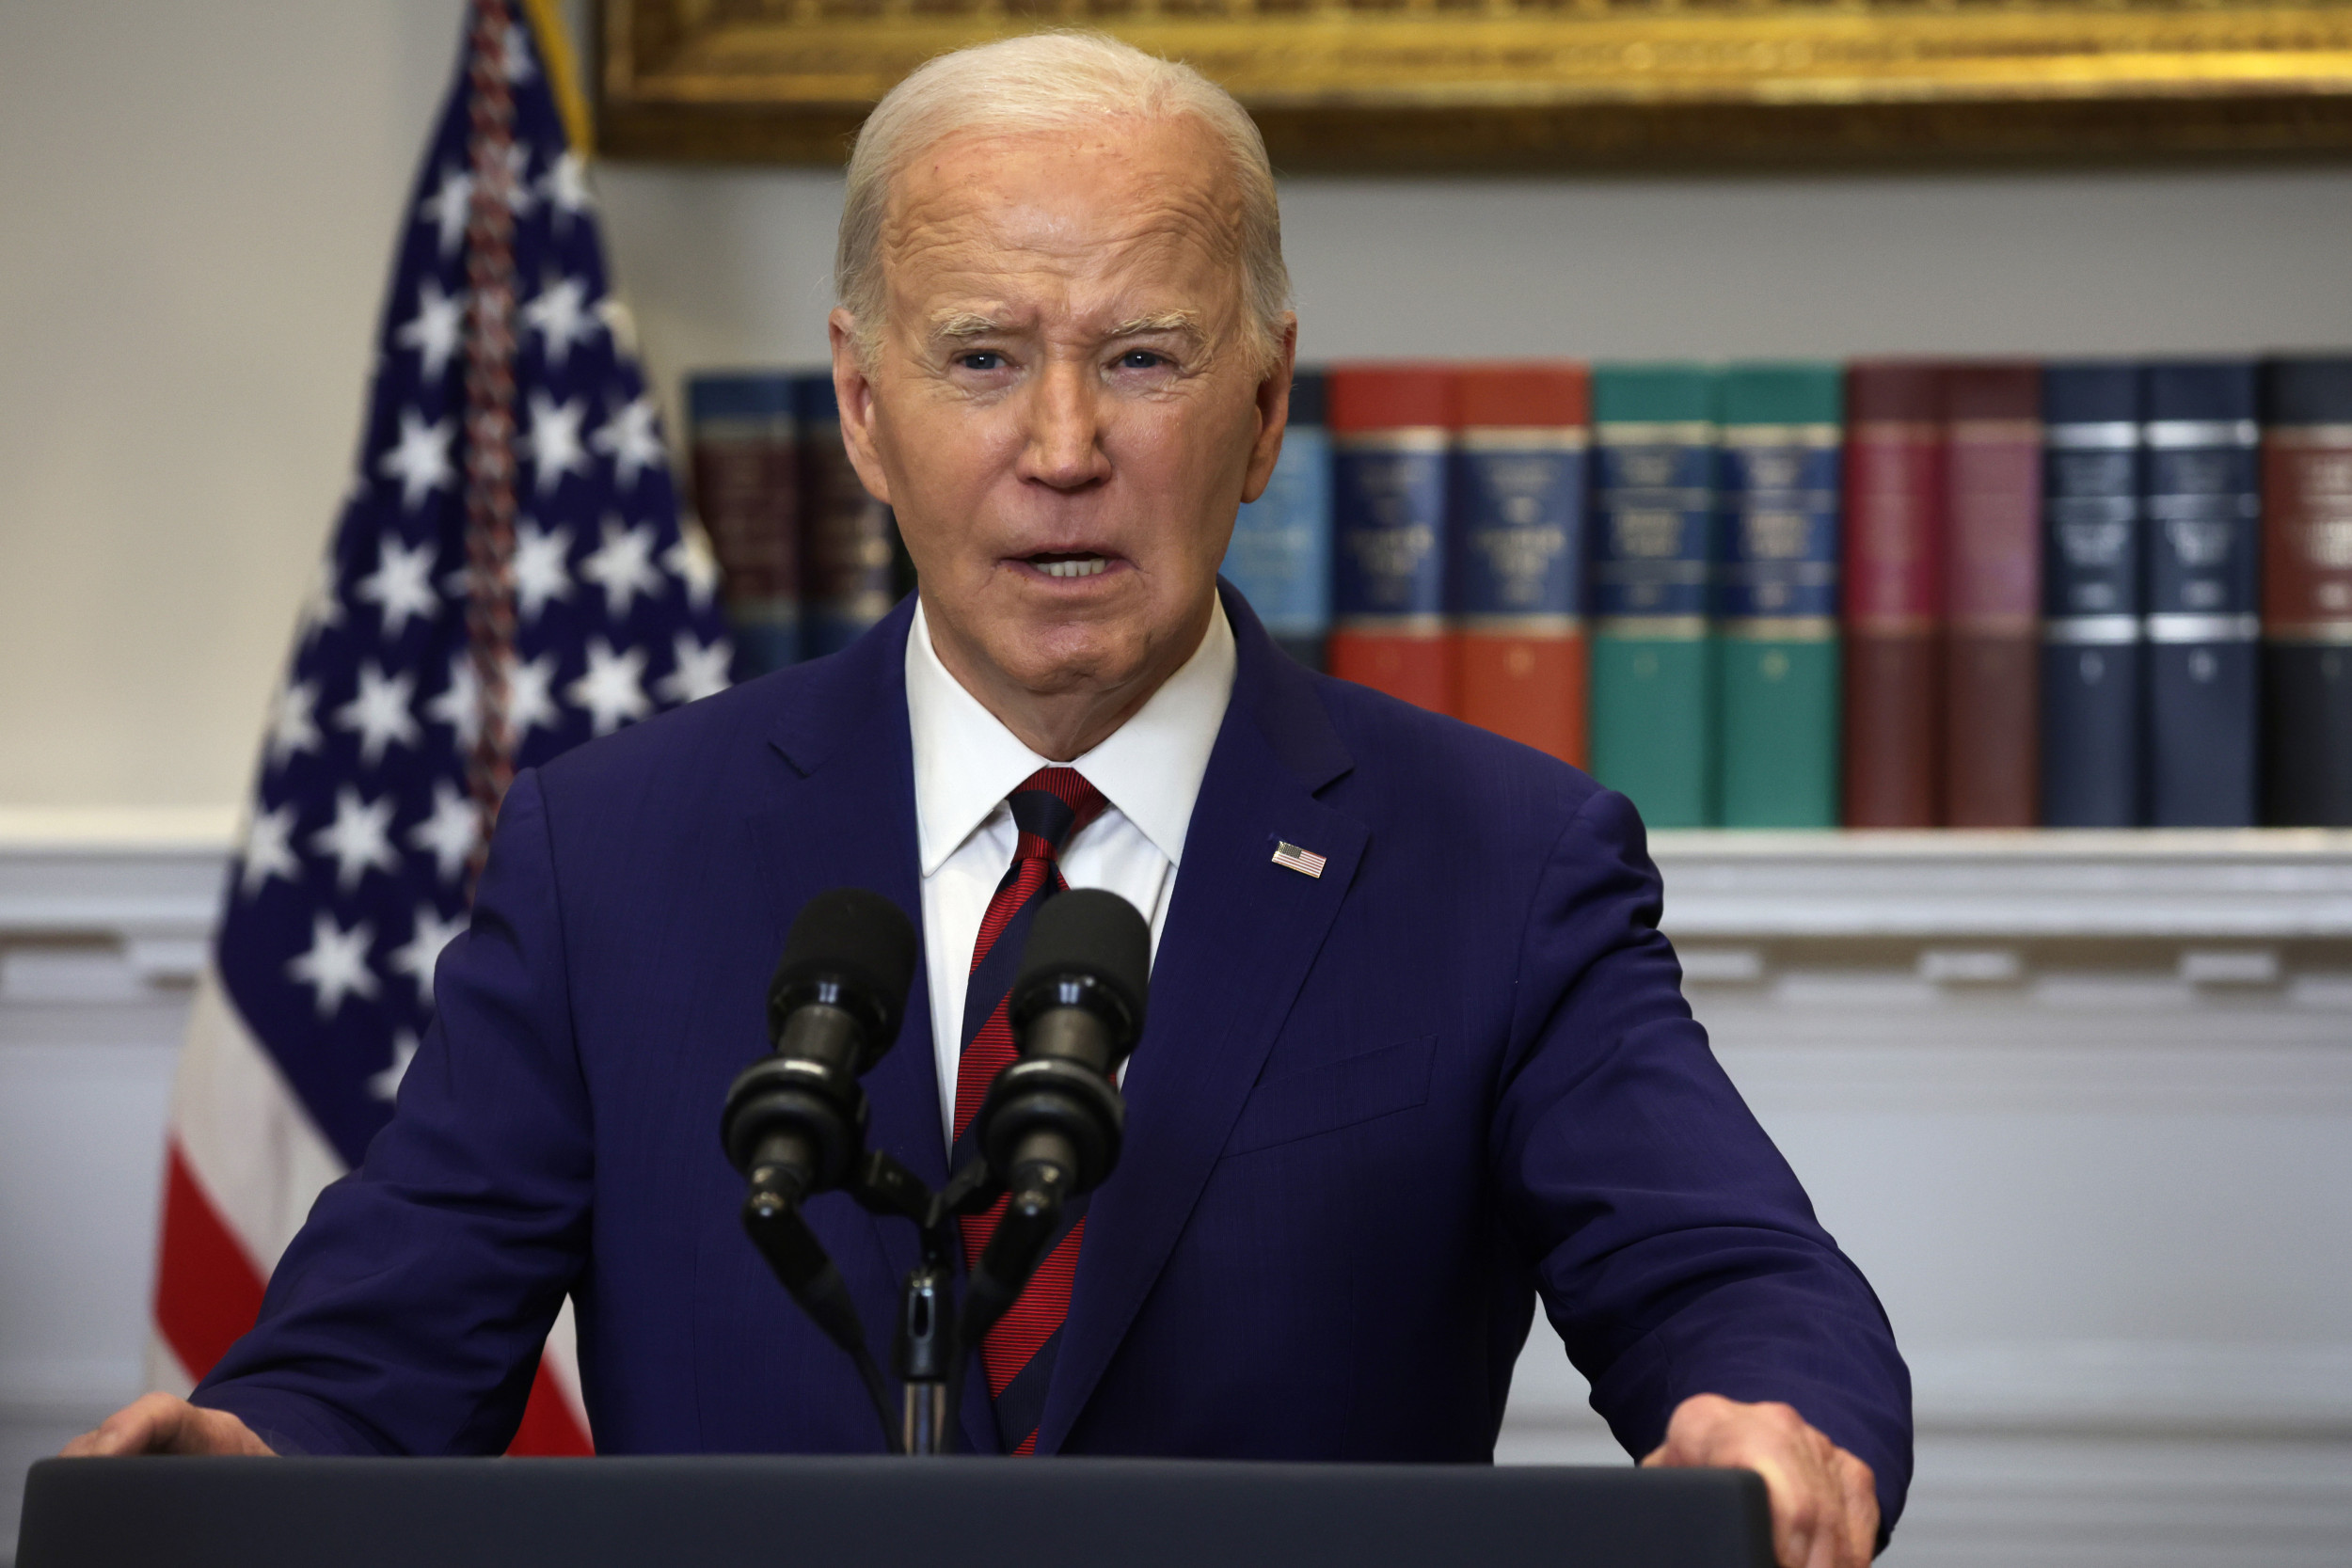 Joe Biden gains ground on Donald Trump in critical swing states